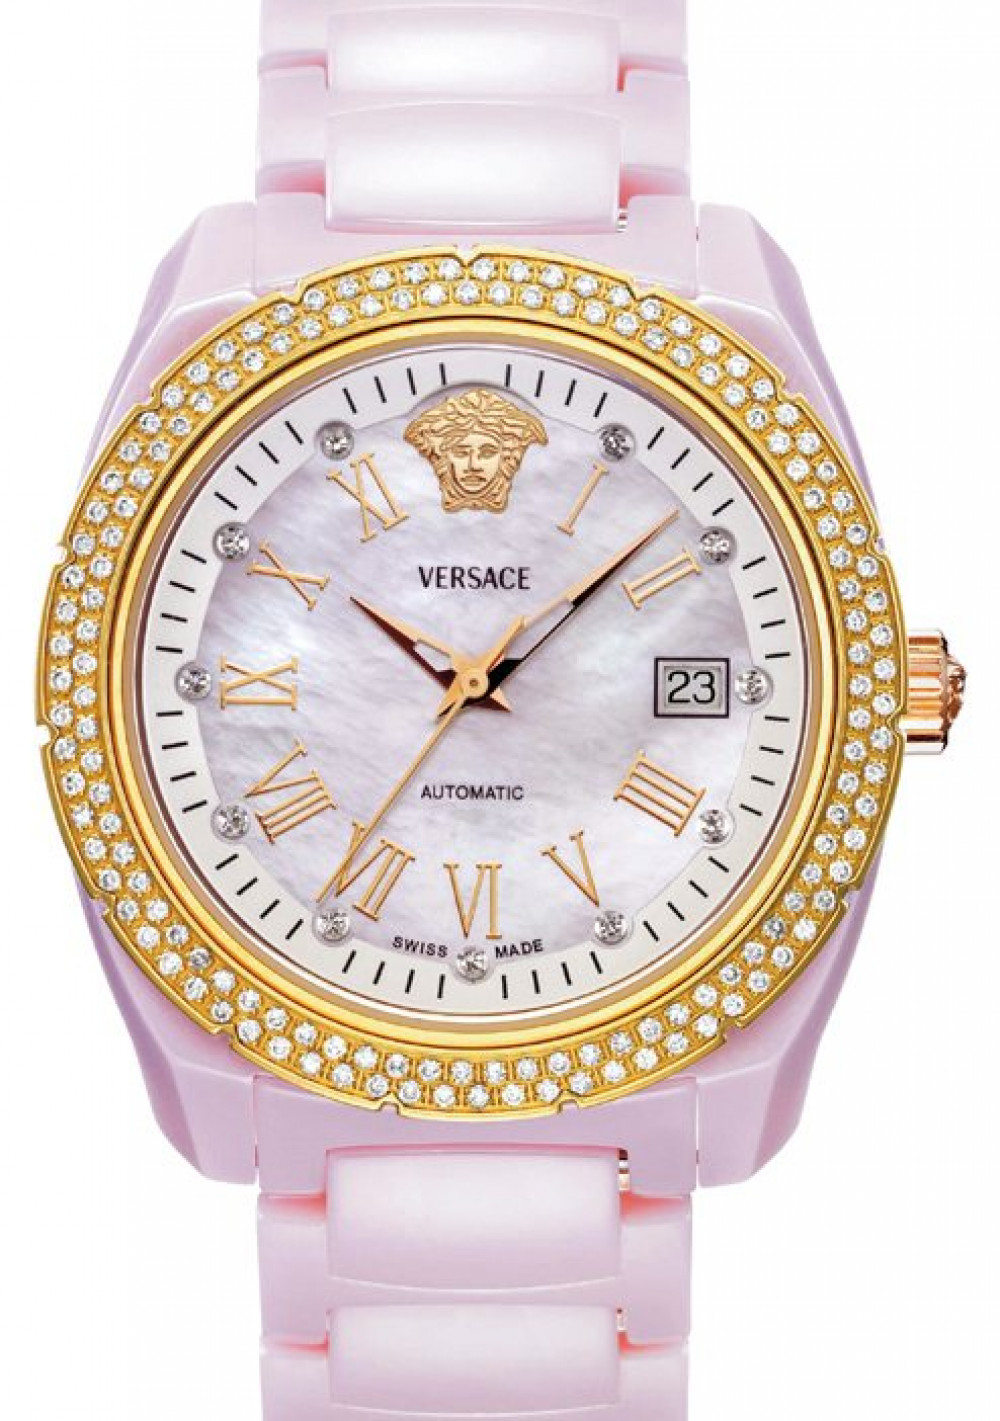 Zegarek firmy Versace, model DV One